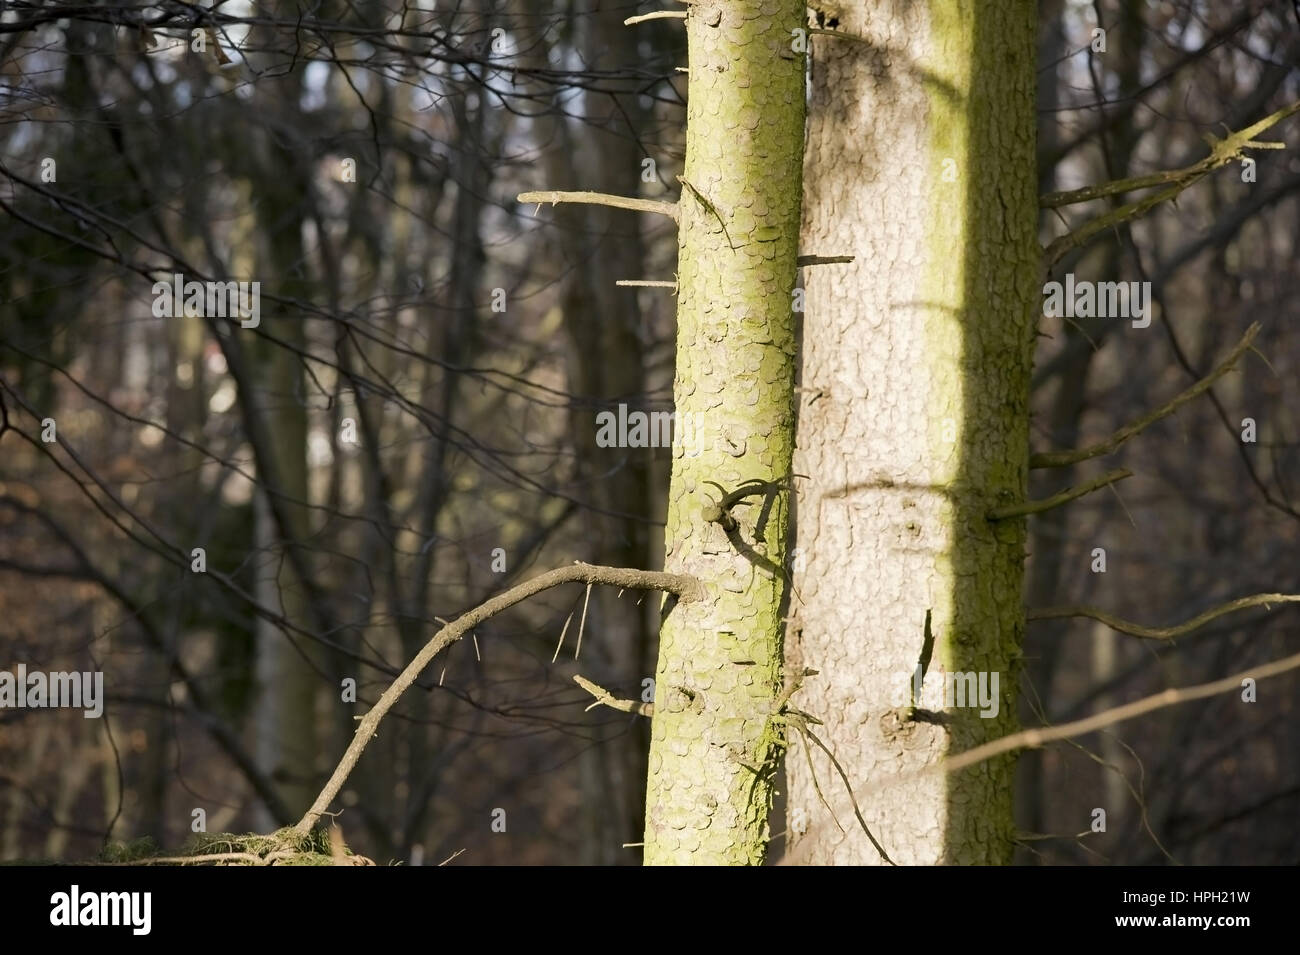 Baumstaemme, Nadelbaum - tree trunks Stock Photo